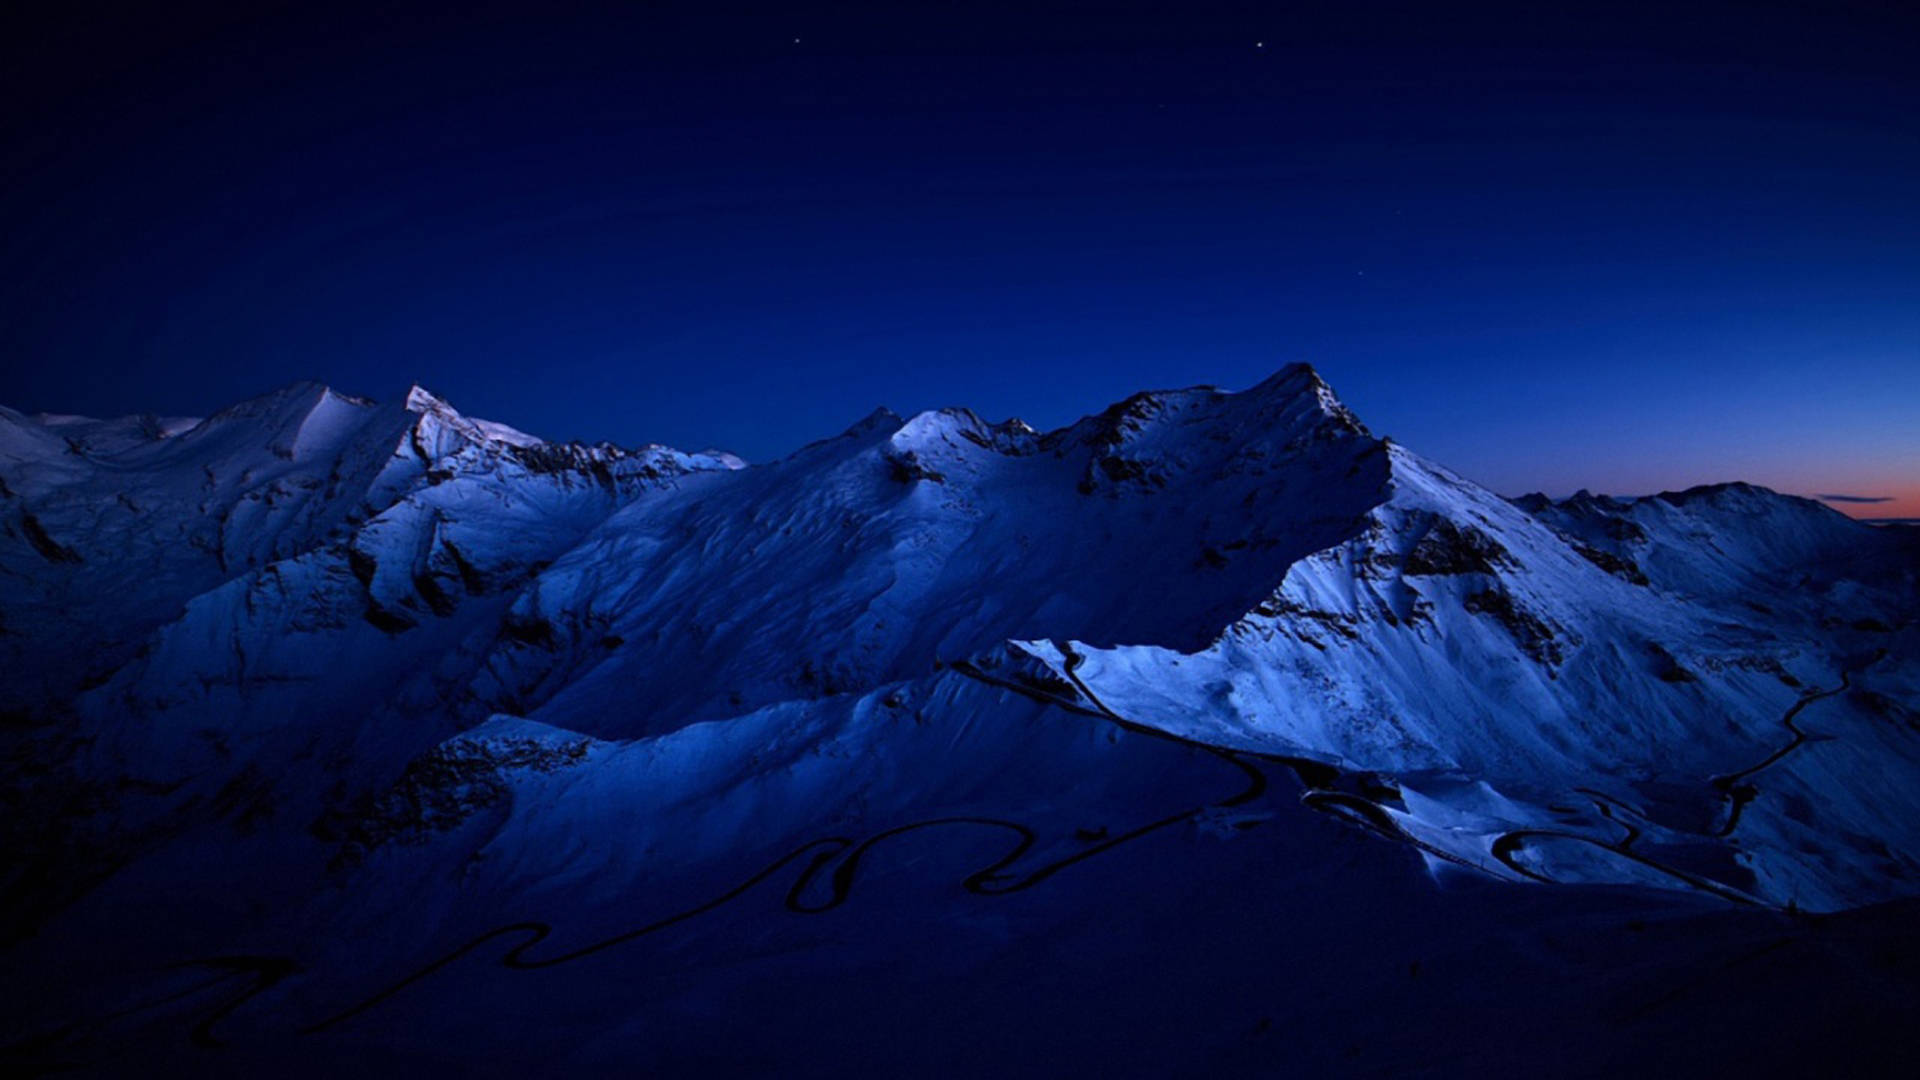 Dark Blue Aesthetic Snow-Capped Mountain Wallpaper